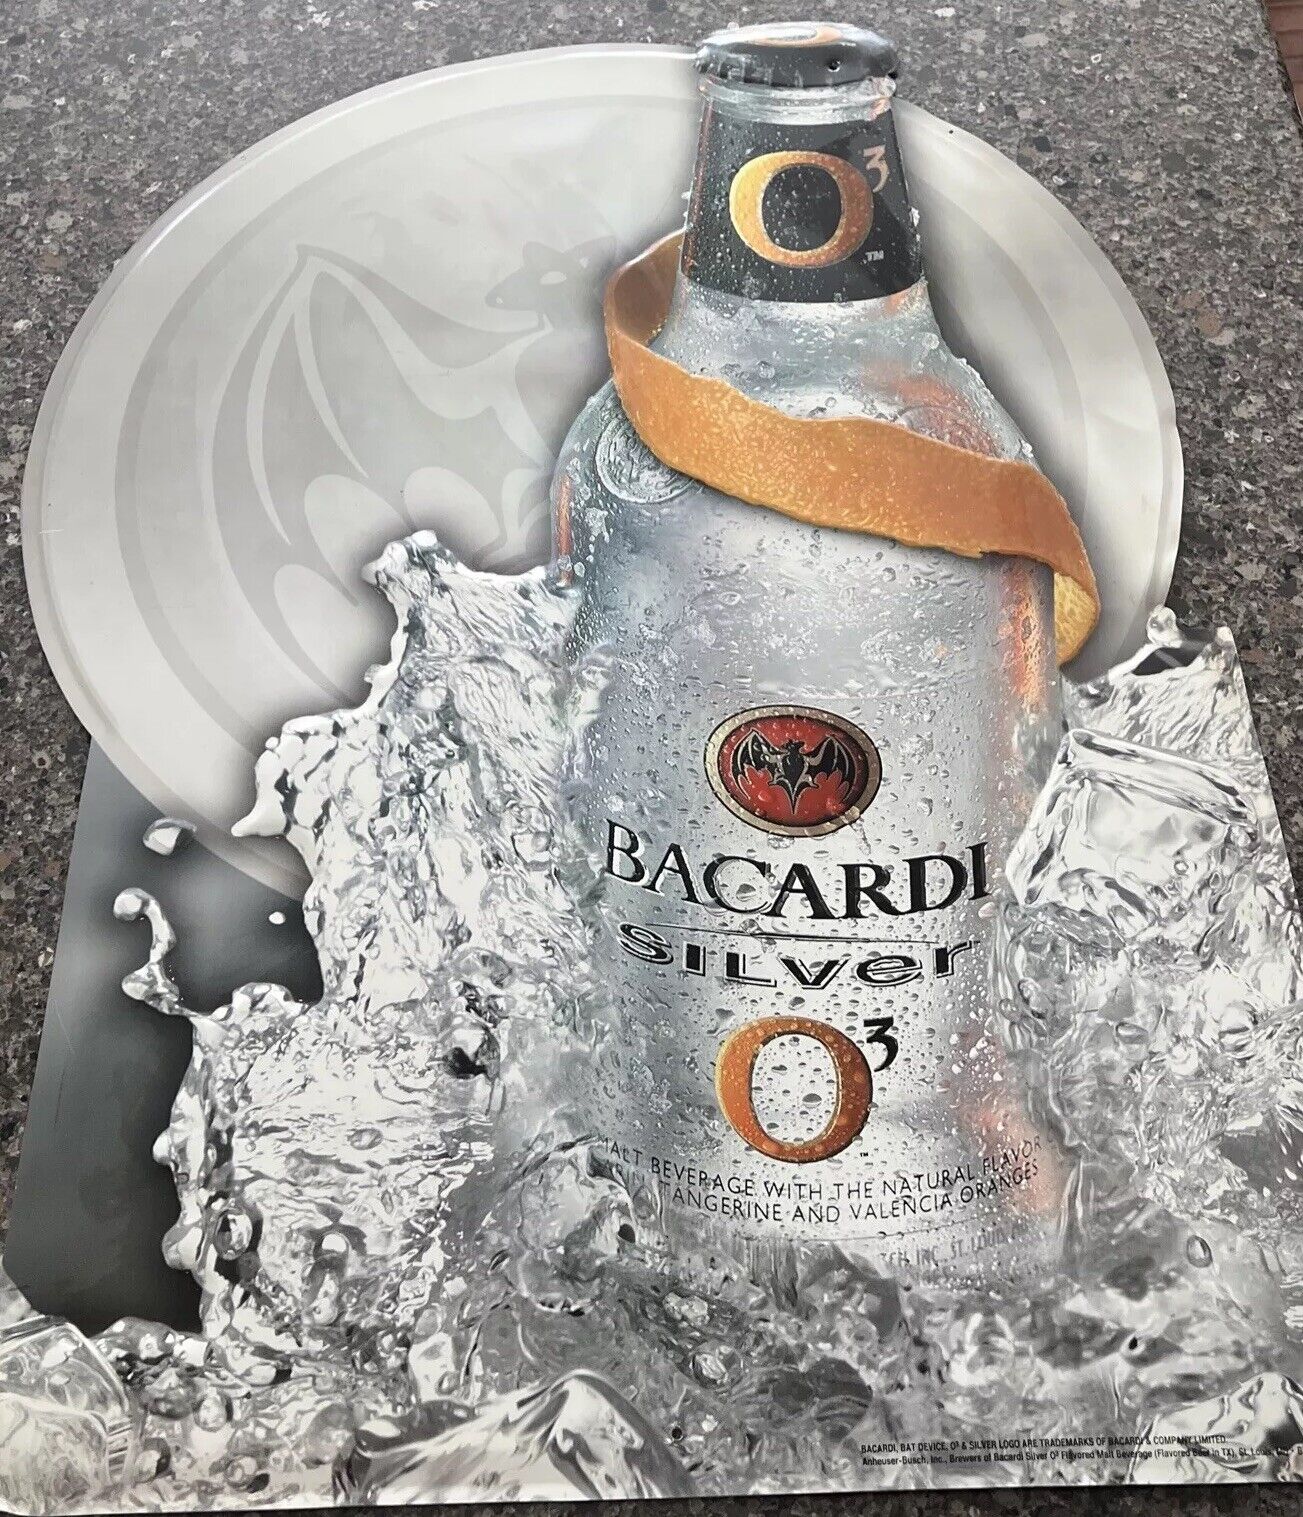 Bacardi Silver O3 Metal Tin Advertising Sign 36x26 Anheuser Busch Malt Beverage